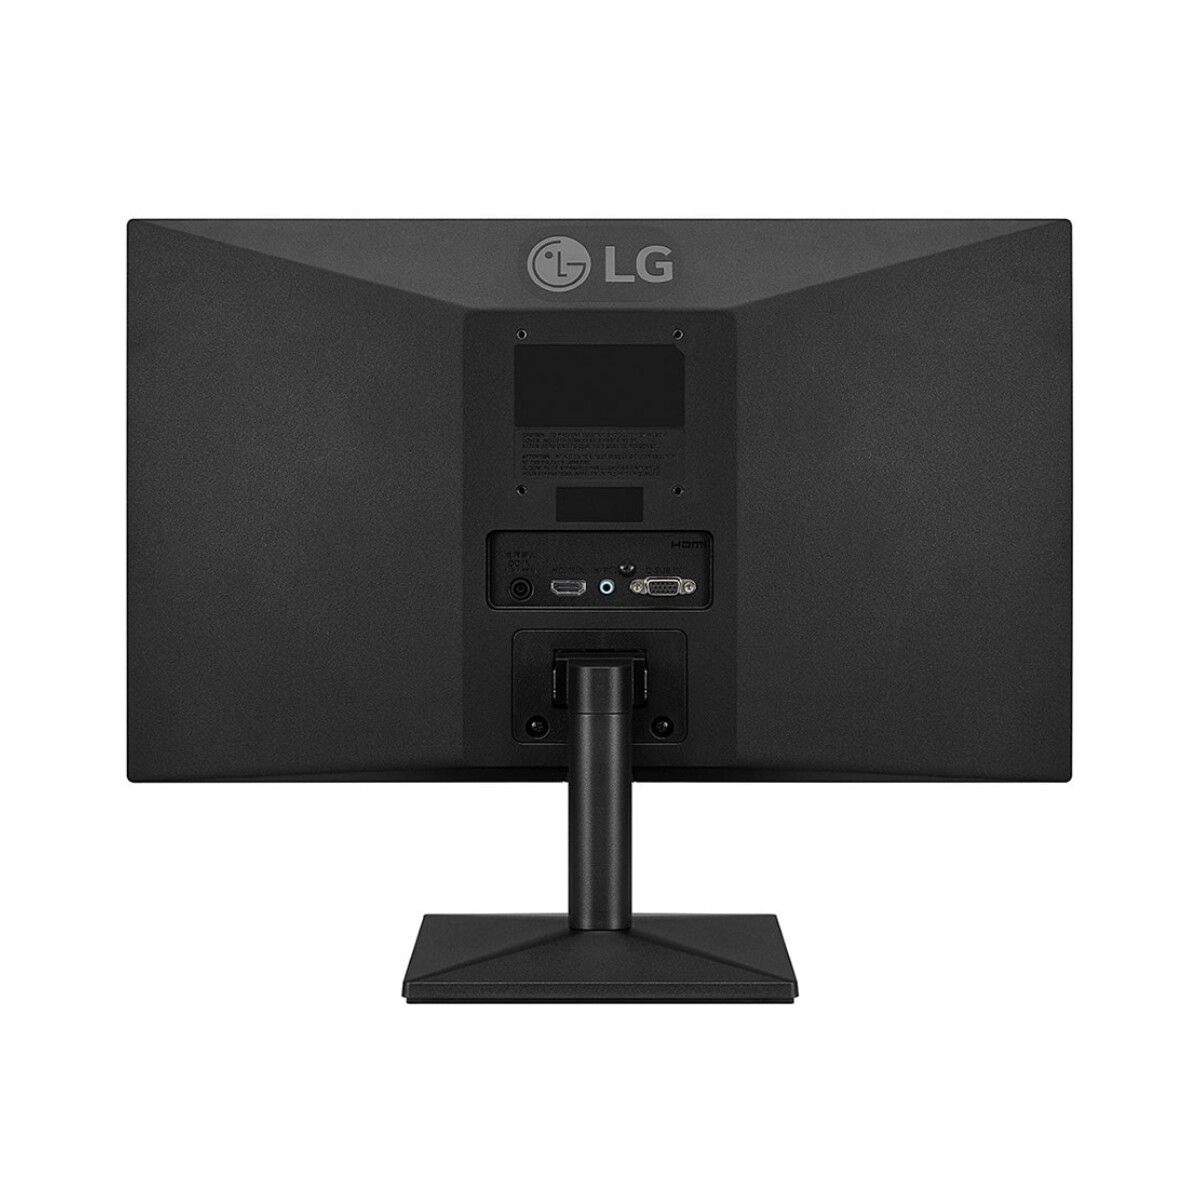 Monitor lg hd 19.5' Black